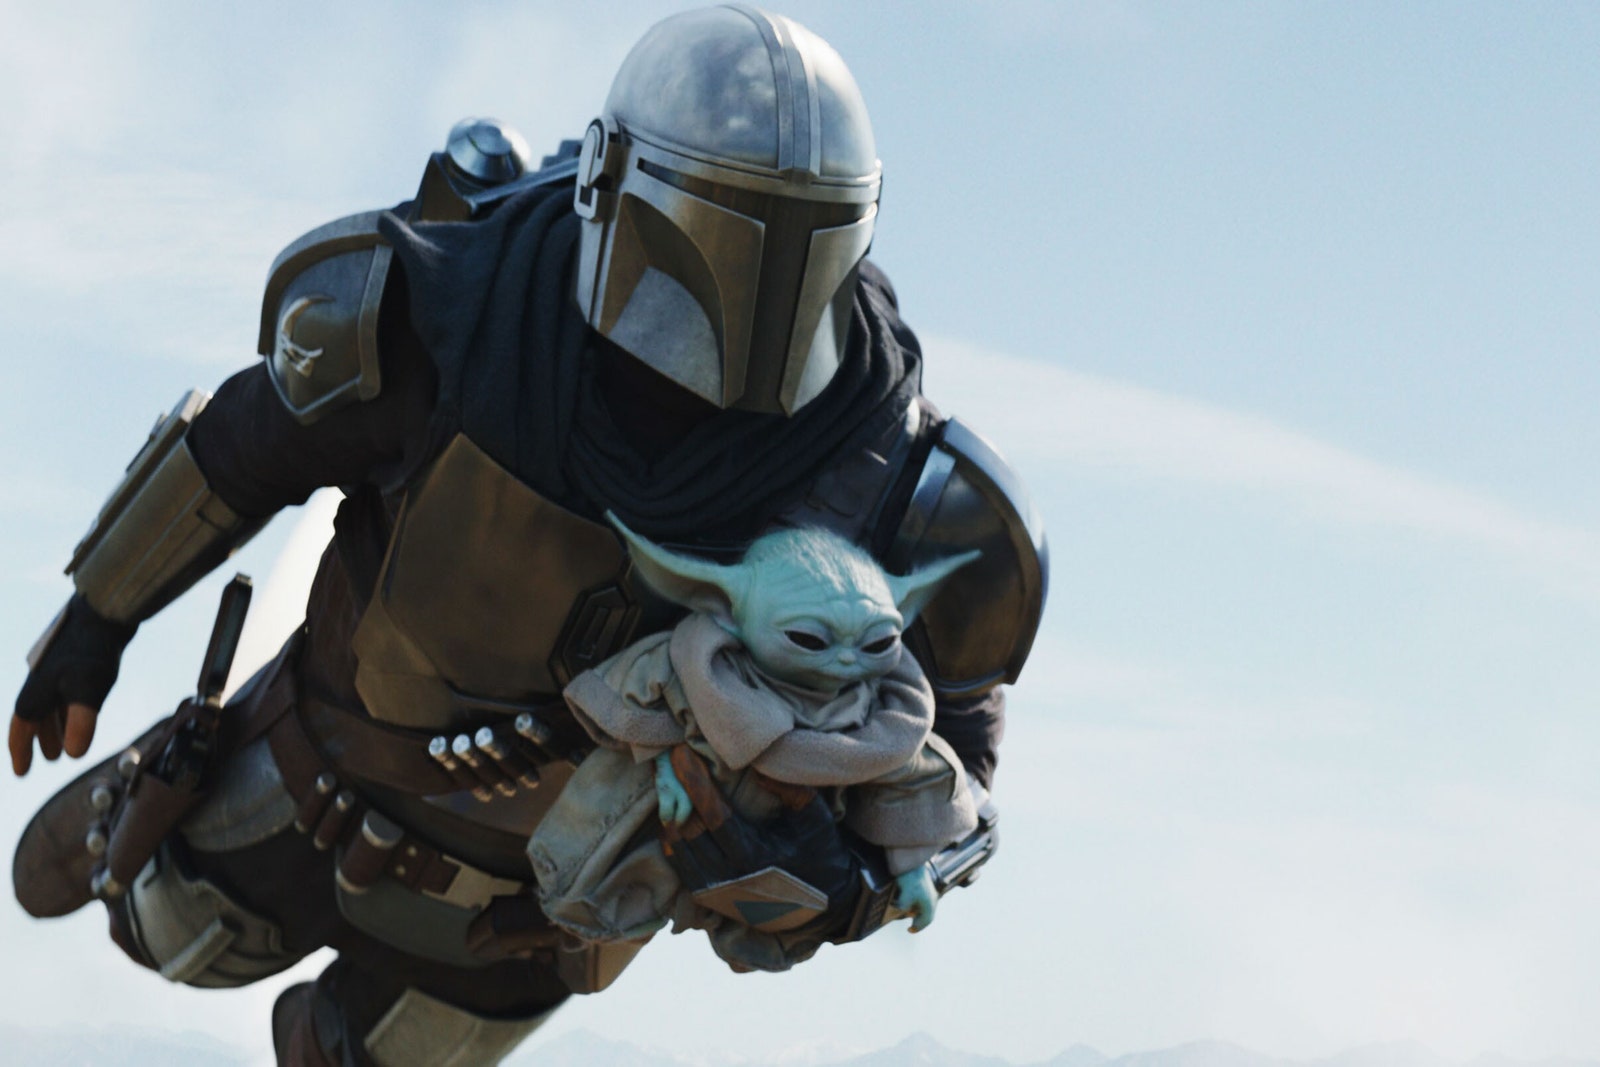 Mandalorian flying with baby Yoda